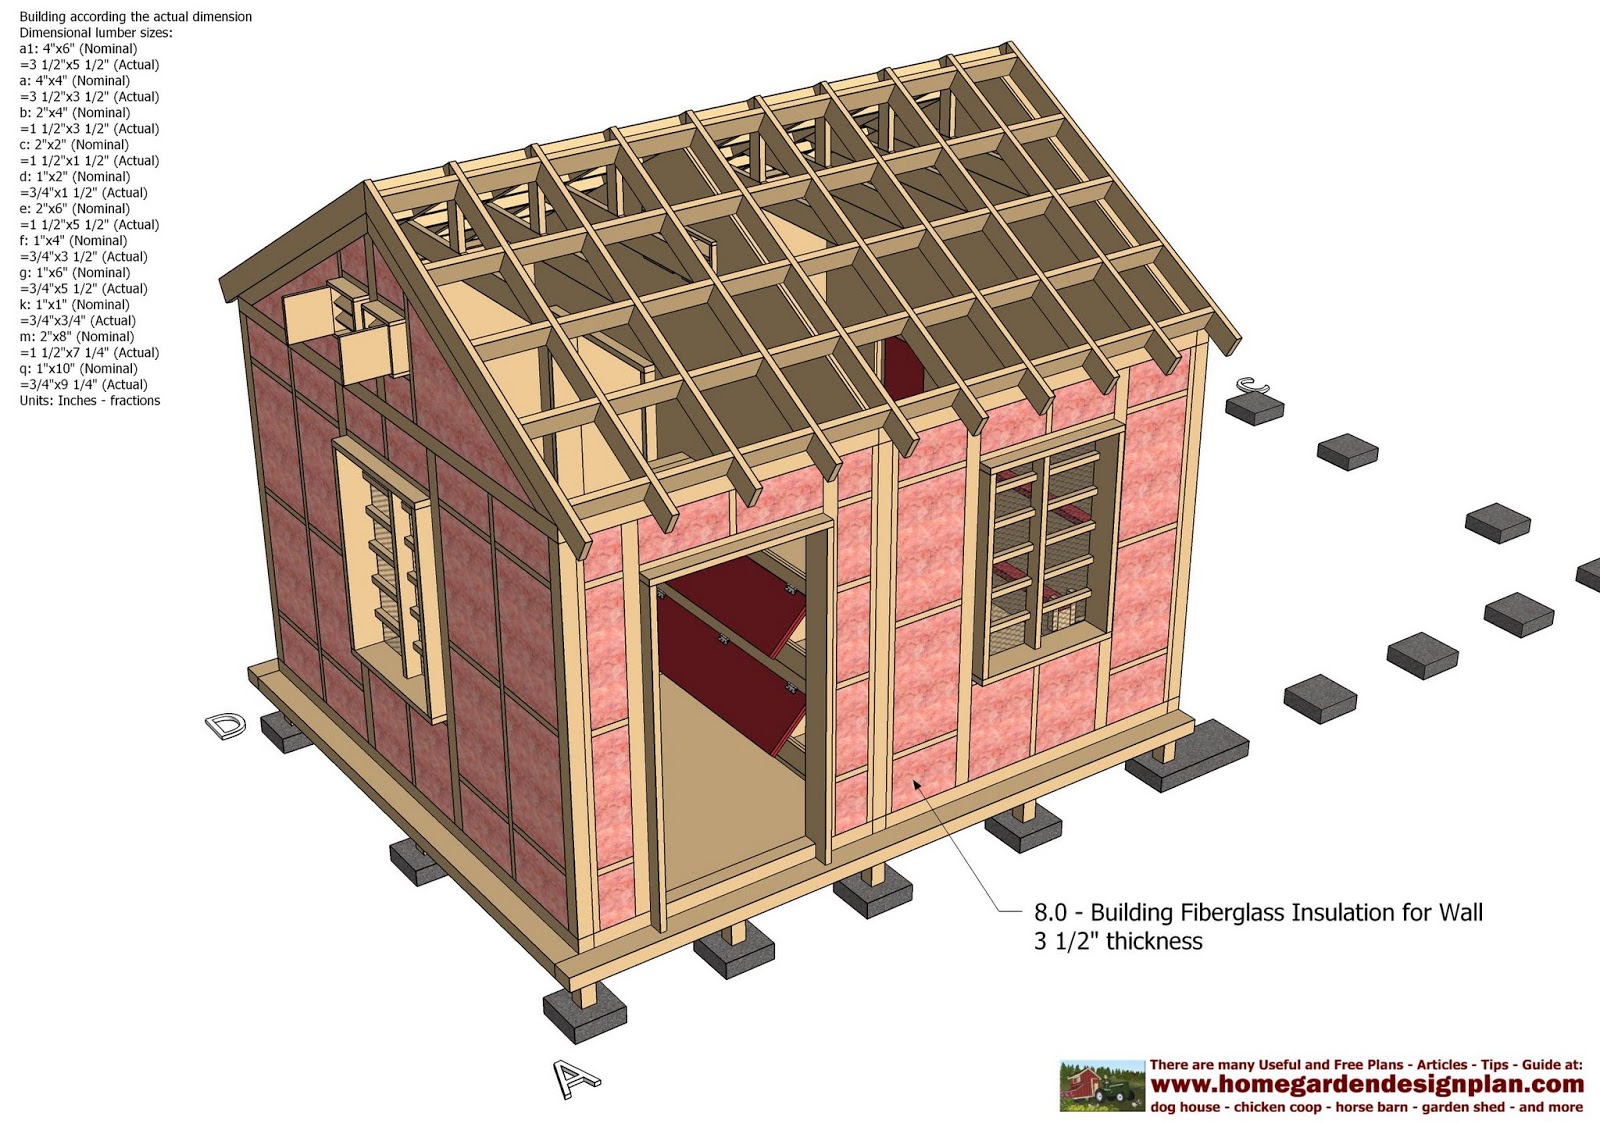 Sntila: CB210 Combo Plans Chicken Coop Plans Construction Garden Sheds 